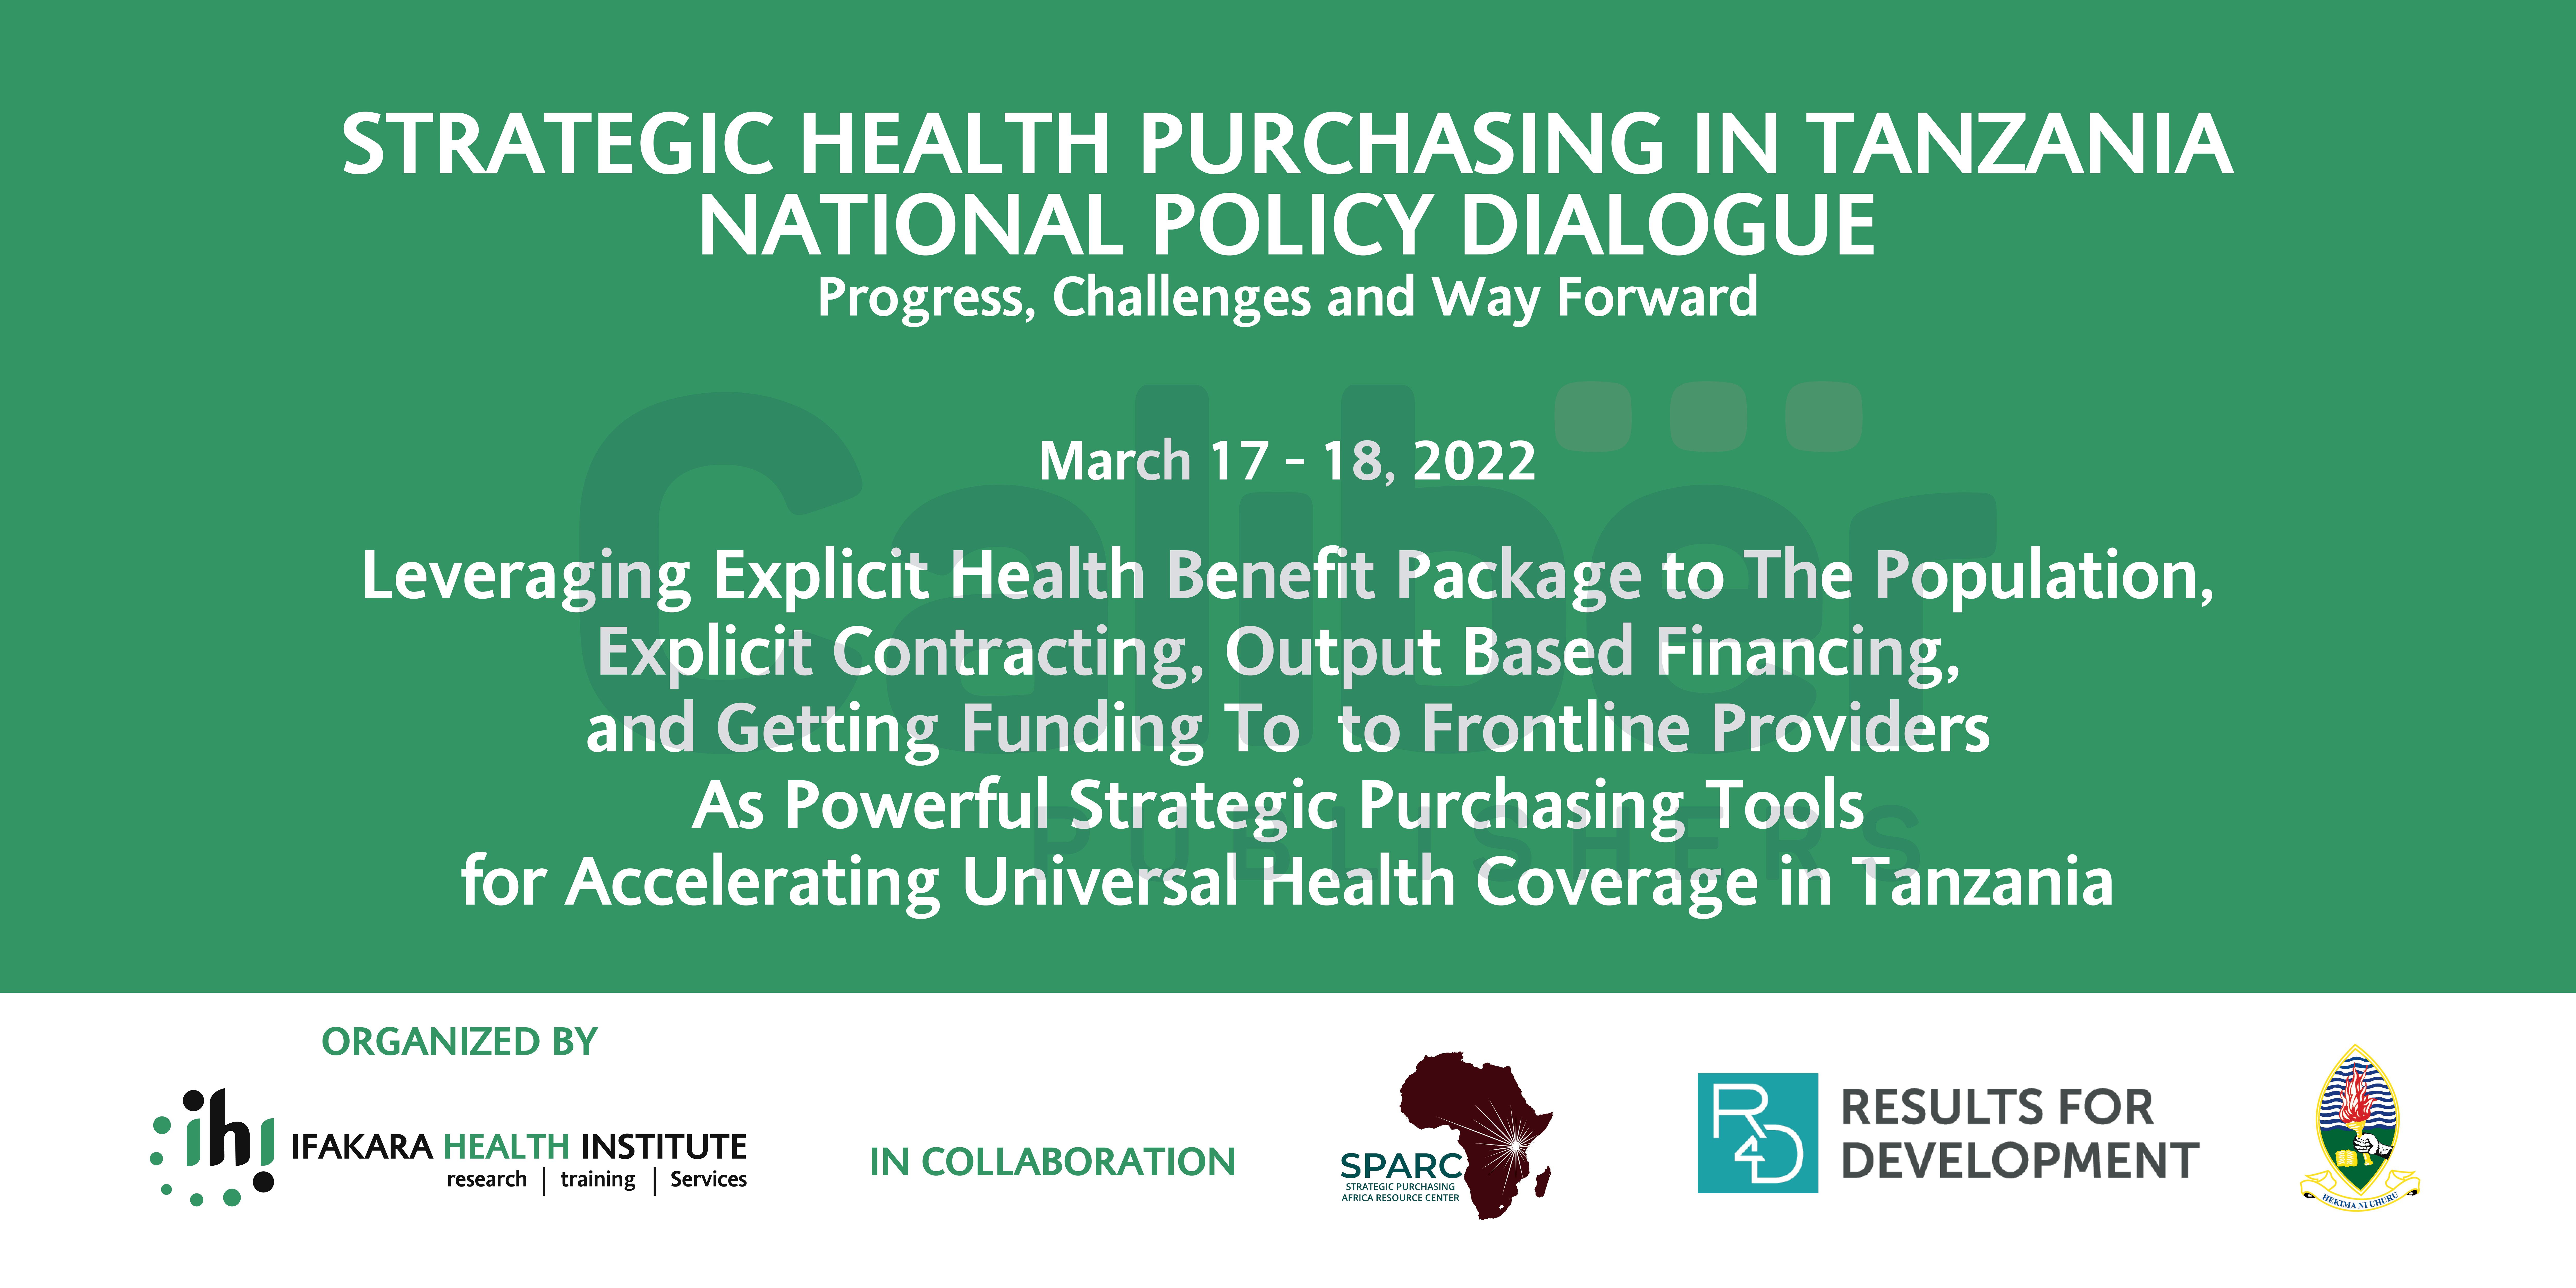 IMPACT: Ifakara hosts national policy dialogue on strategic health purchasing in Tanzania